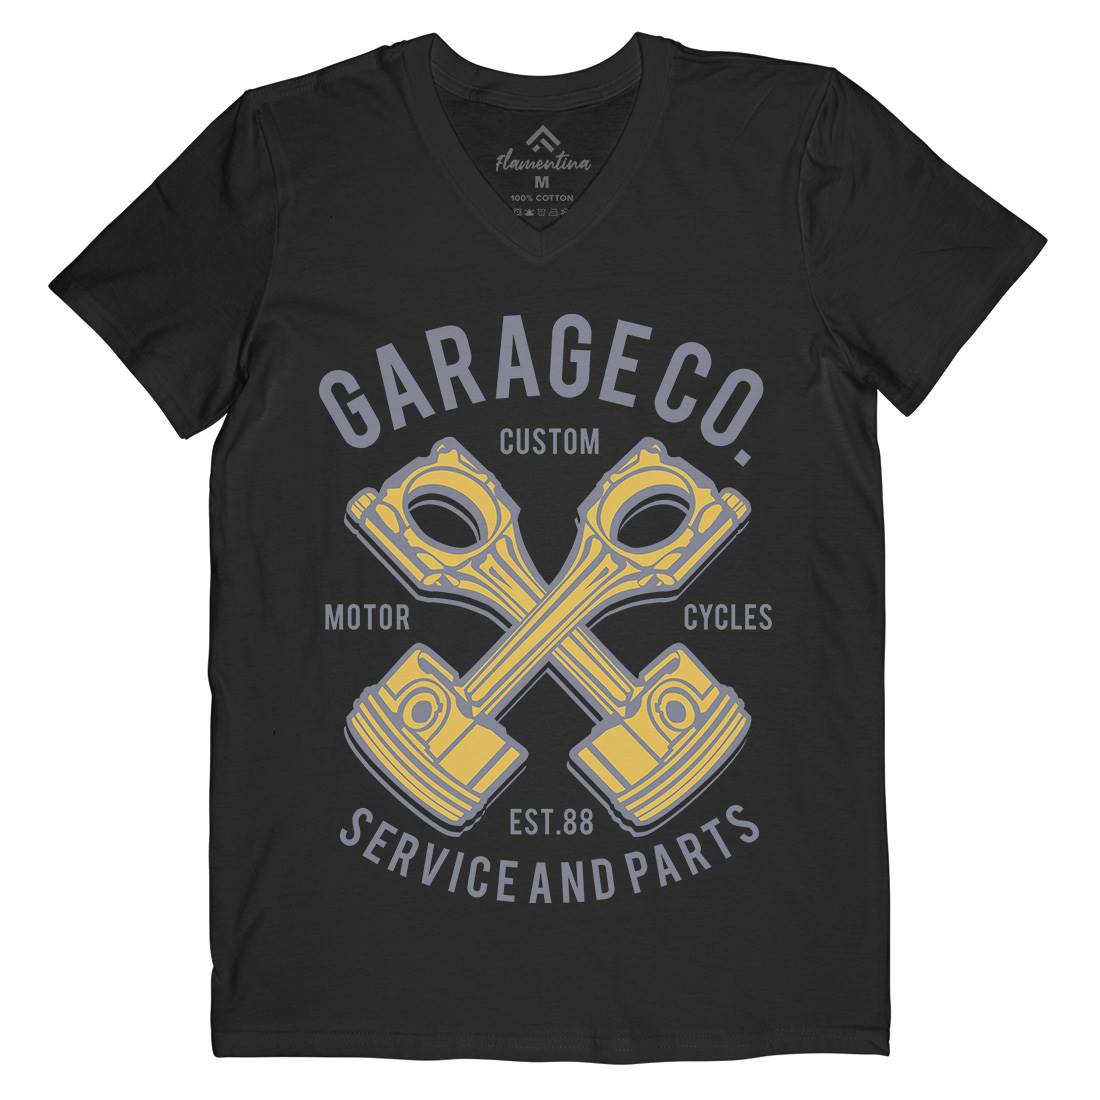 Garage Co Mens V-Neck T-Shirt Cars B216